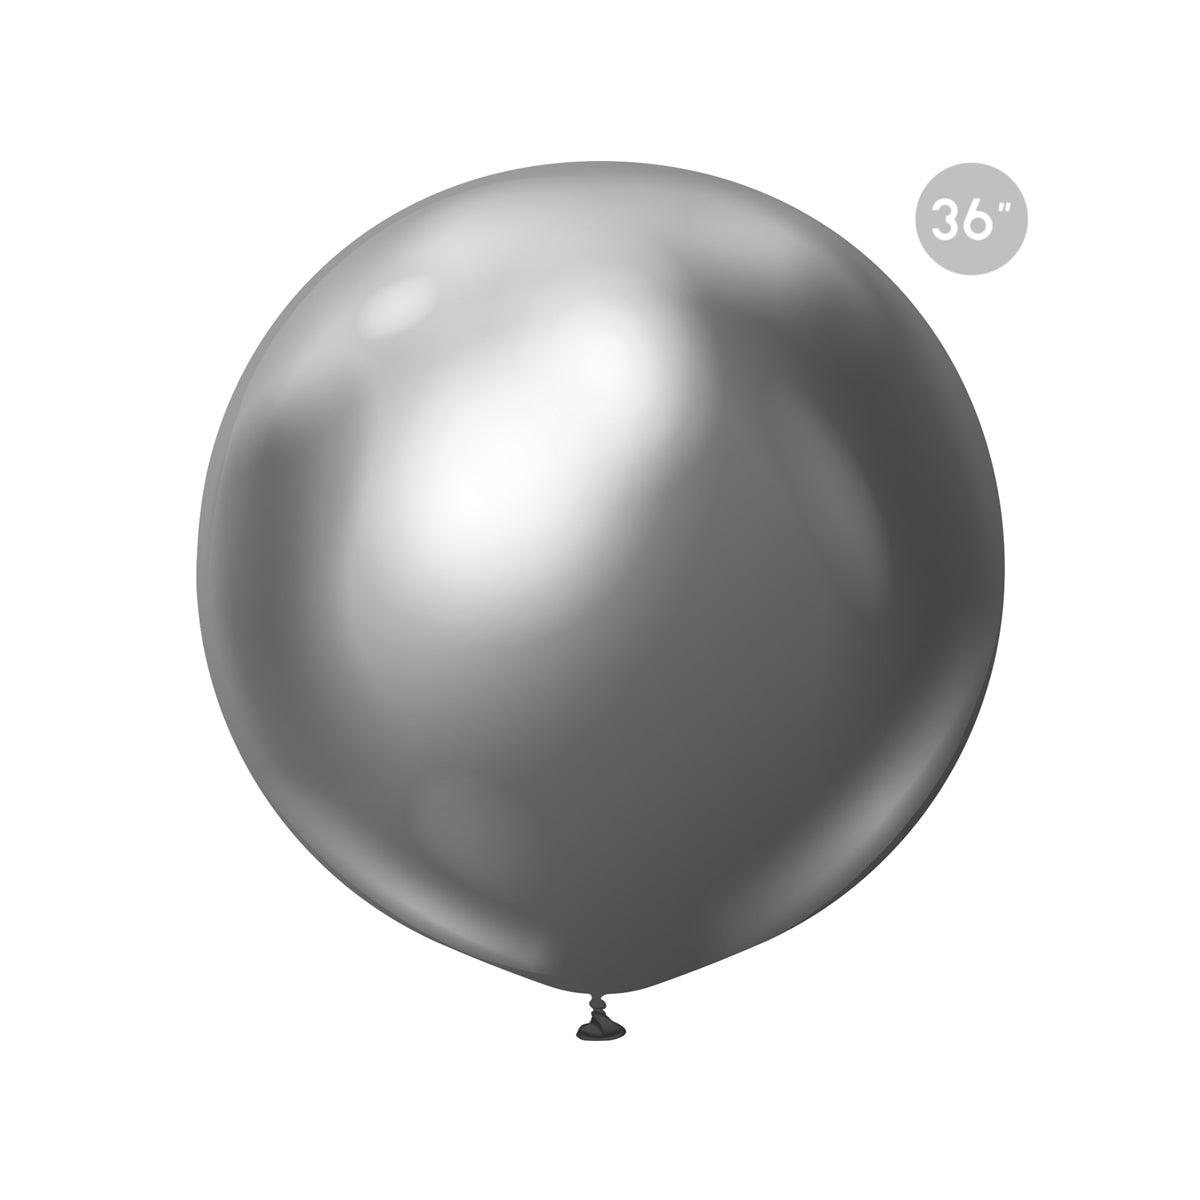 Jumbo Chrome Dark Gray Latex Balloon 36" - New Year Party Balloon, Space Birthday Party Balloon, Superhero Party Balloon